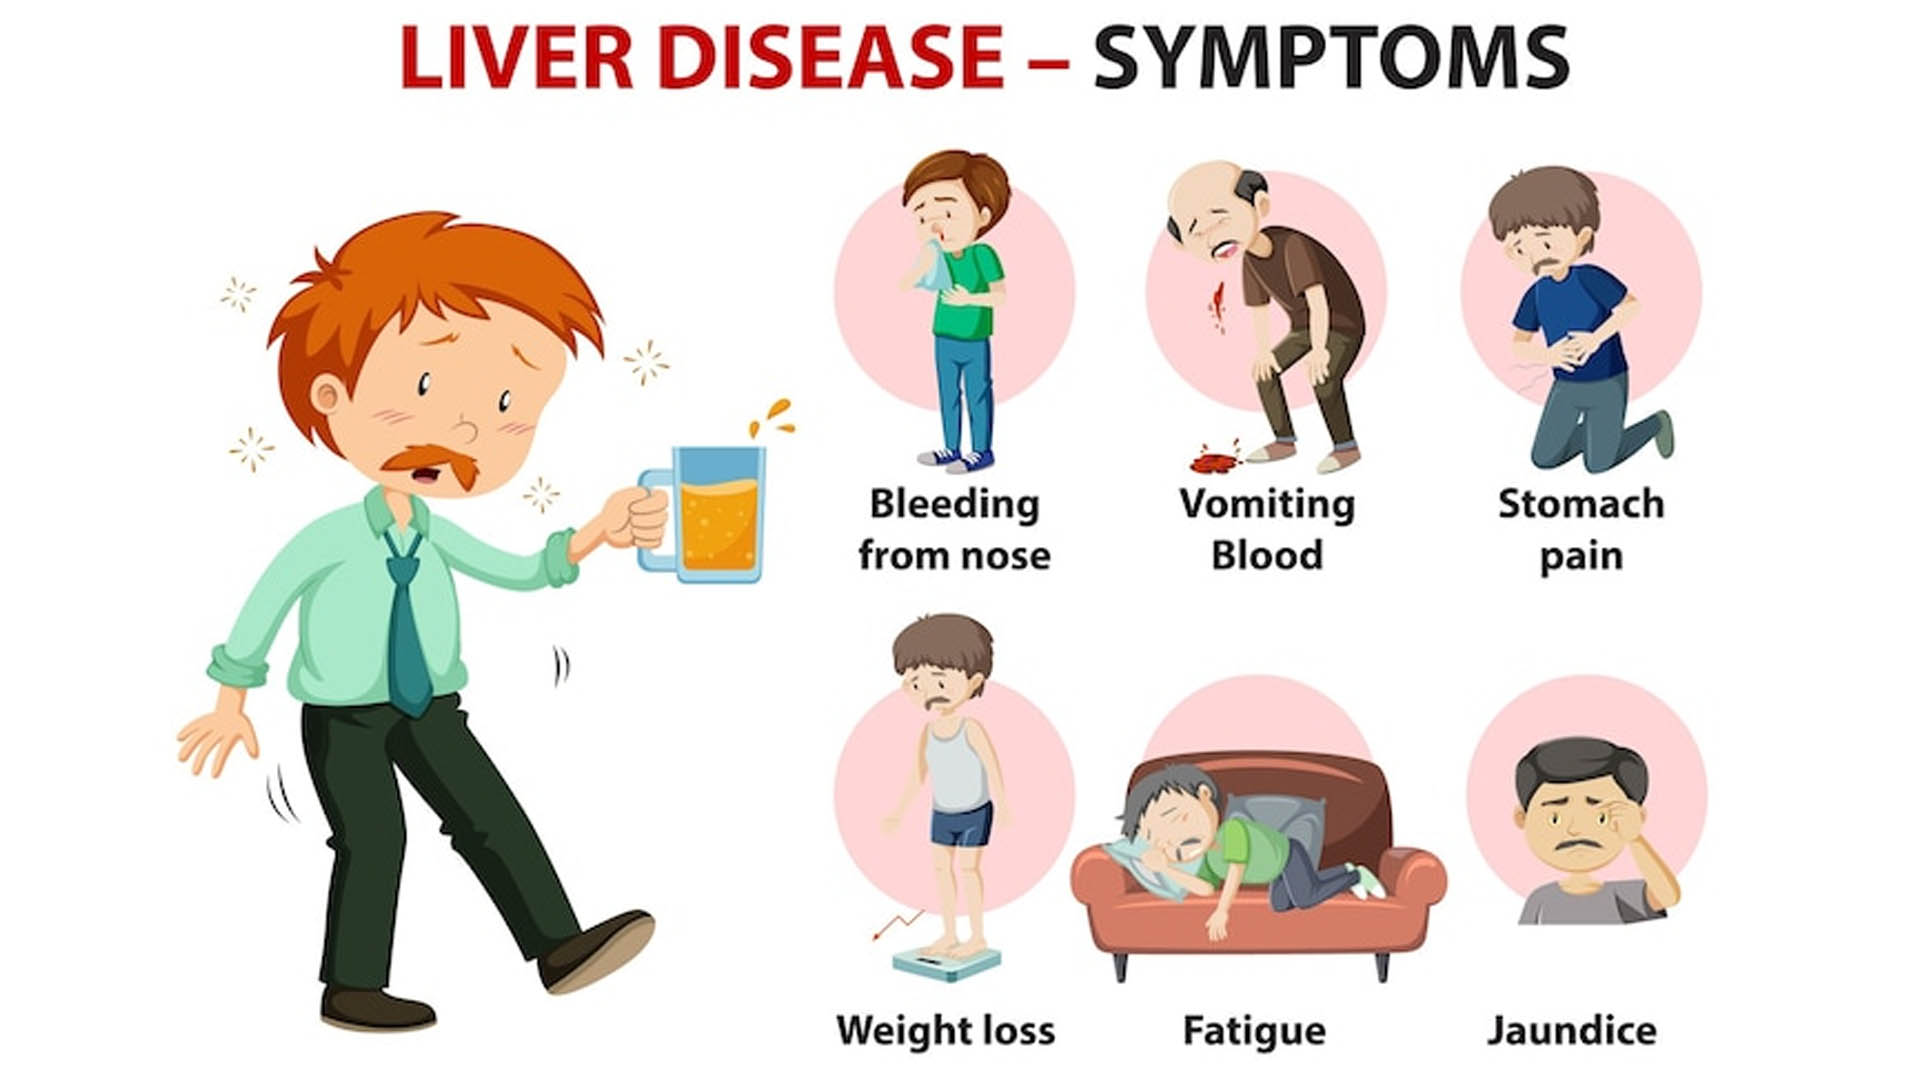 Liver Disease: Symptoms, Causes and Risk Factors